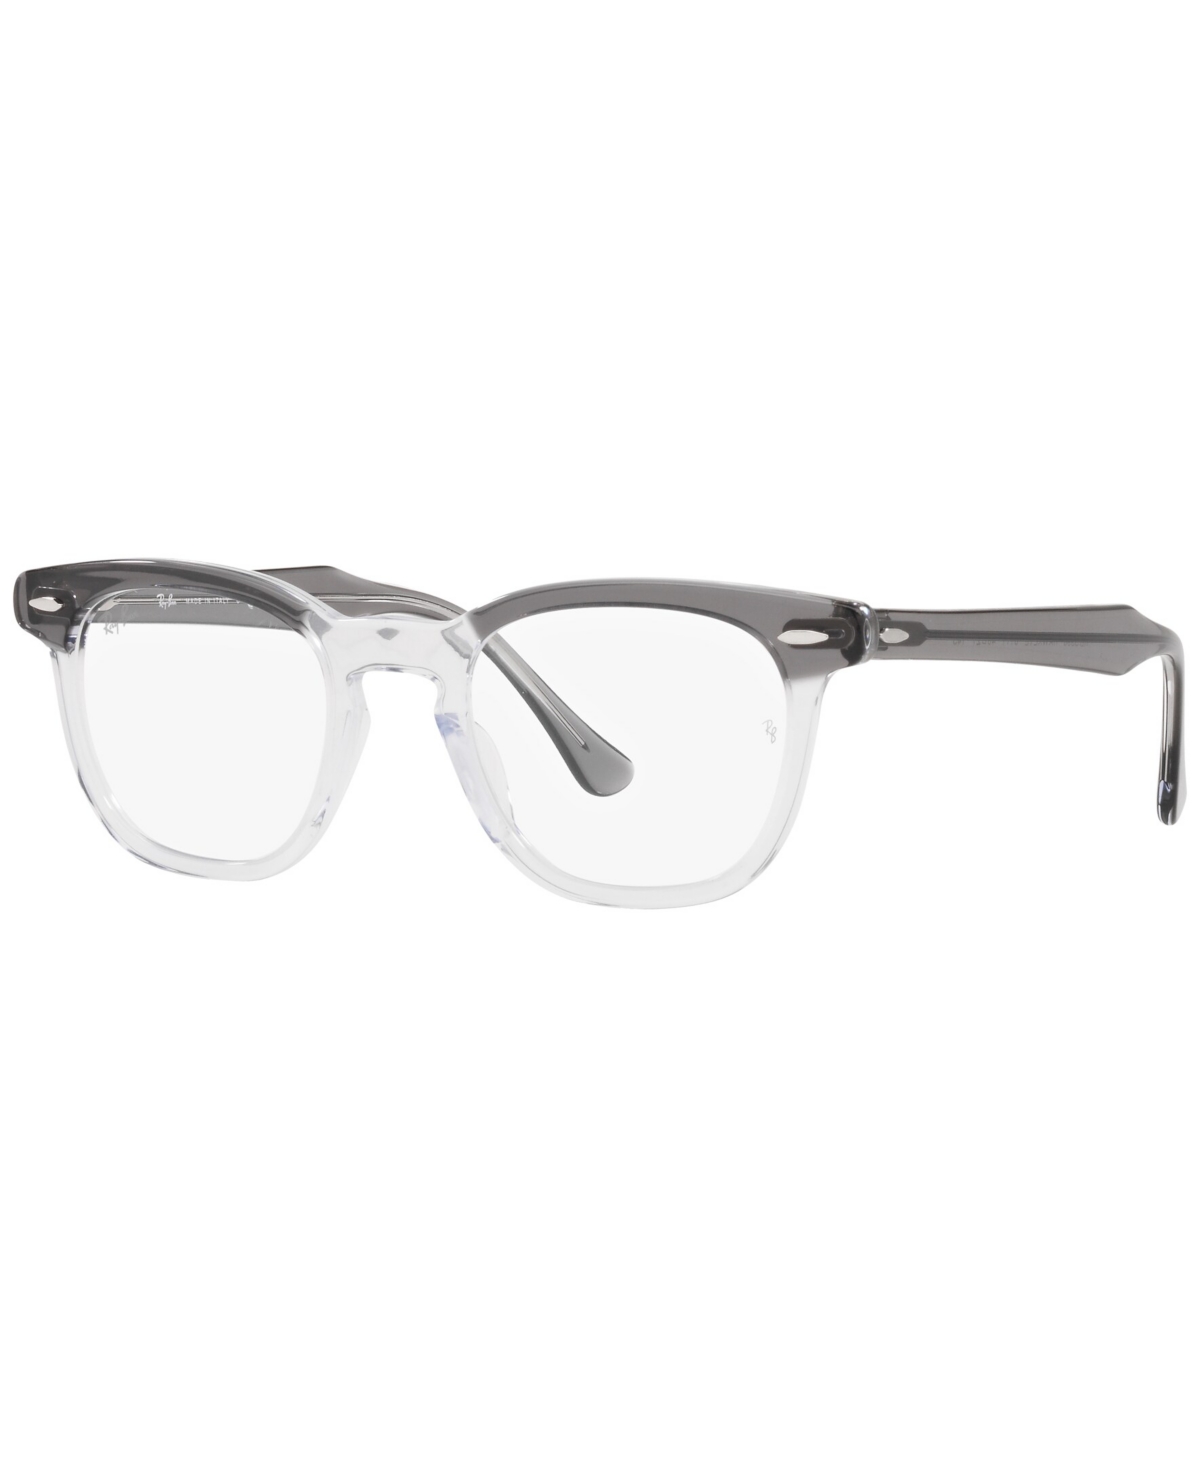 RB5398 Hawkeye Unisex Square Eyeglasses - Blue on Trasparent